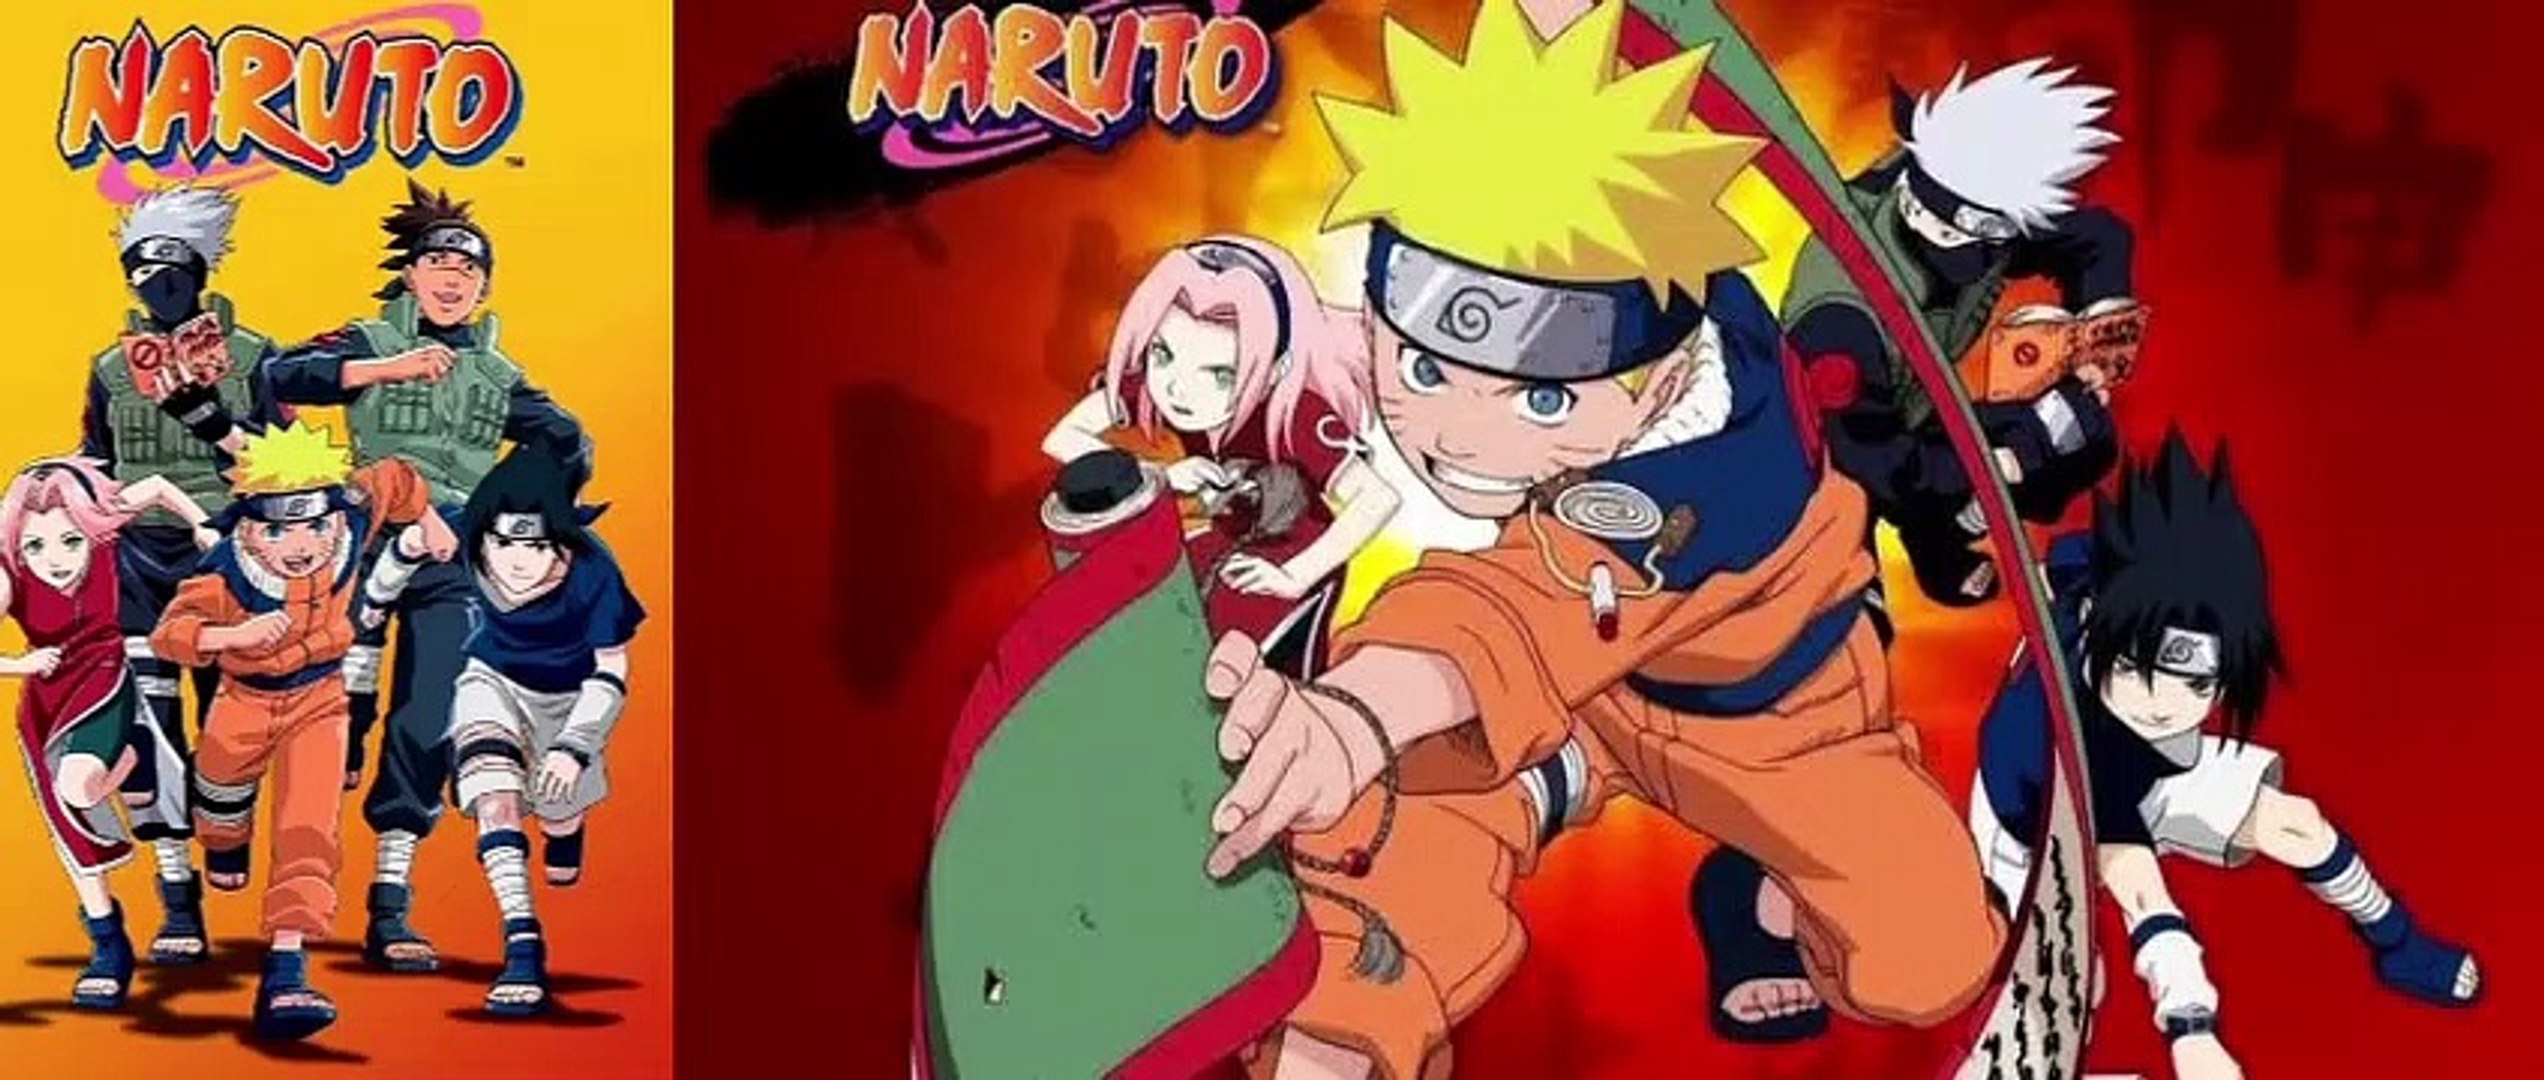 Naruto S02 E06 Hindi Episode - Sakura Ki Nayi Avatar!